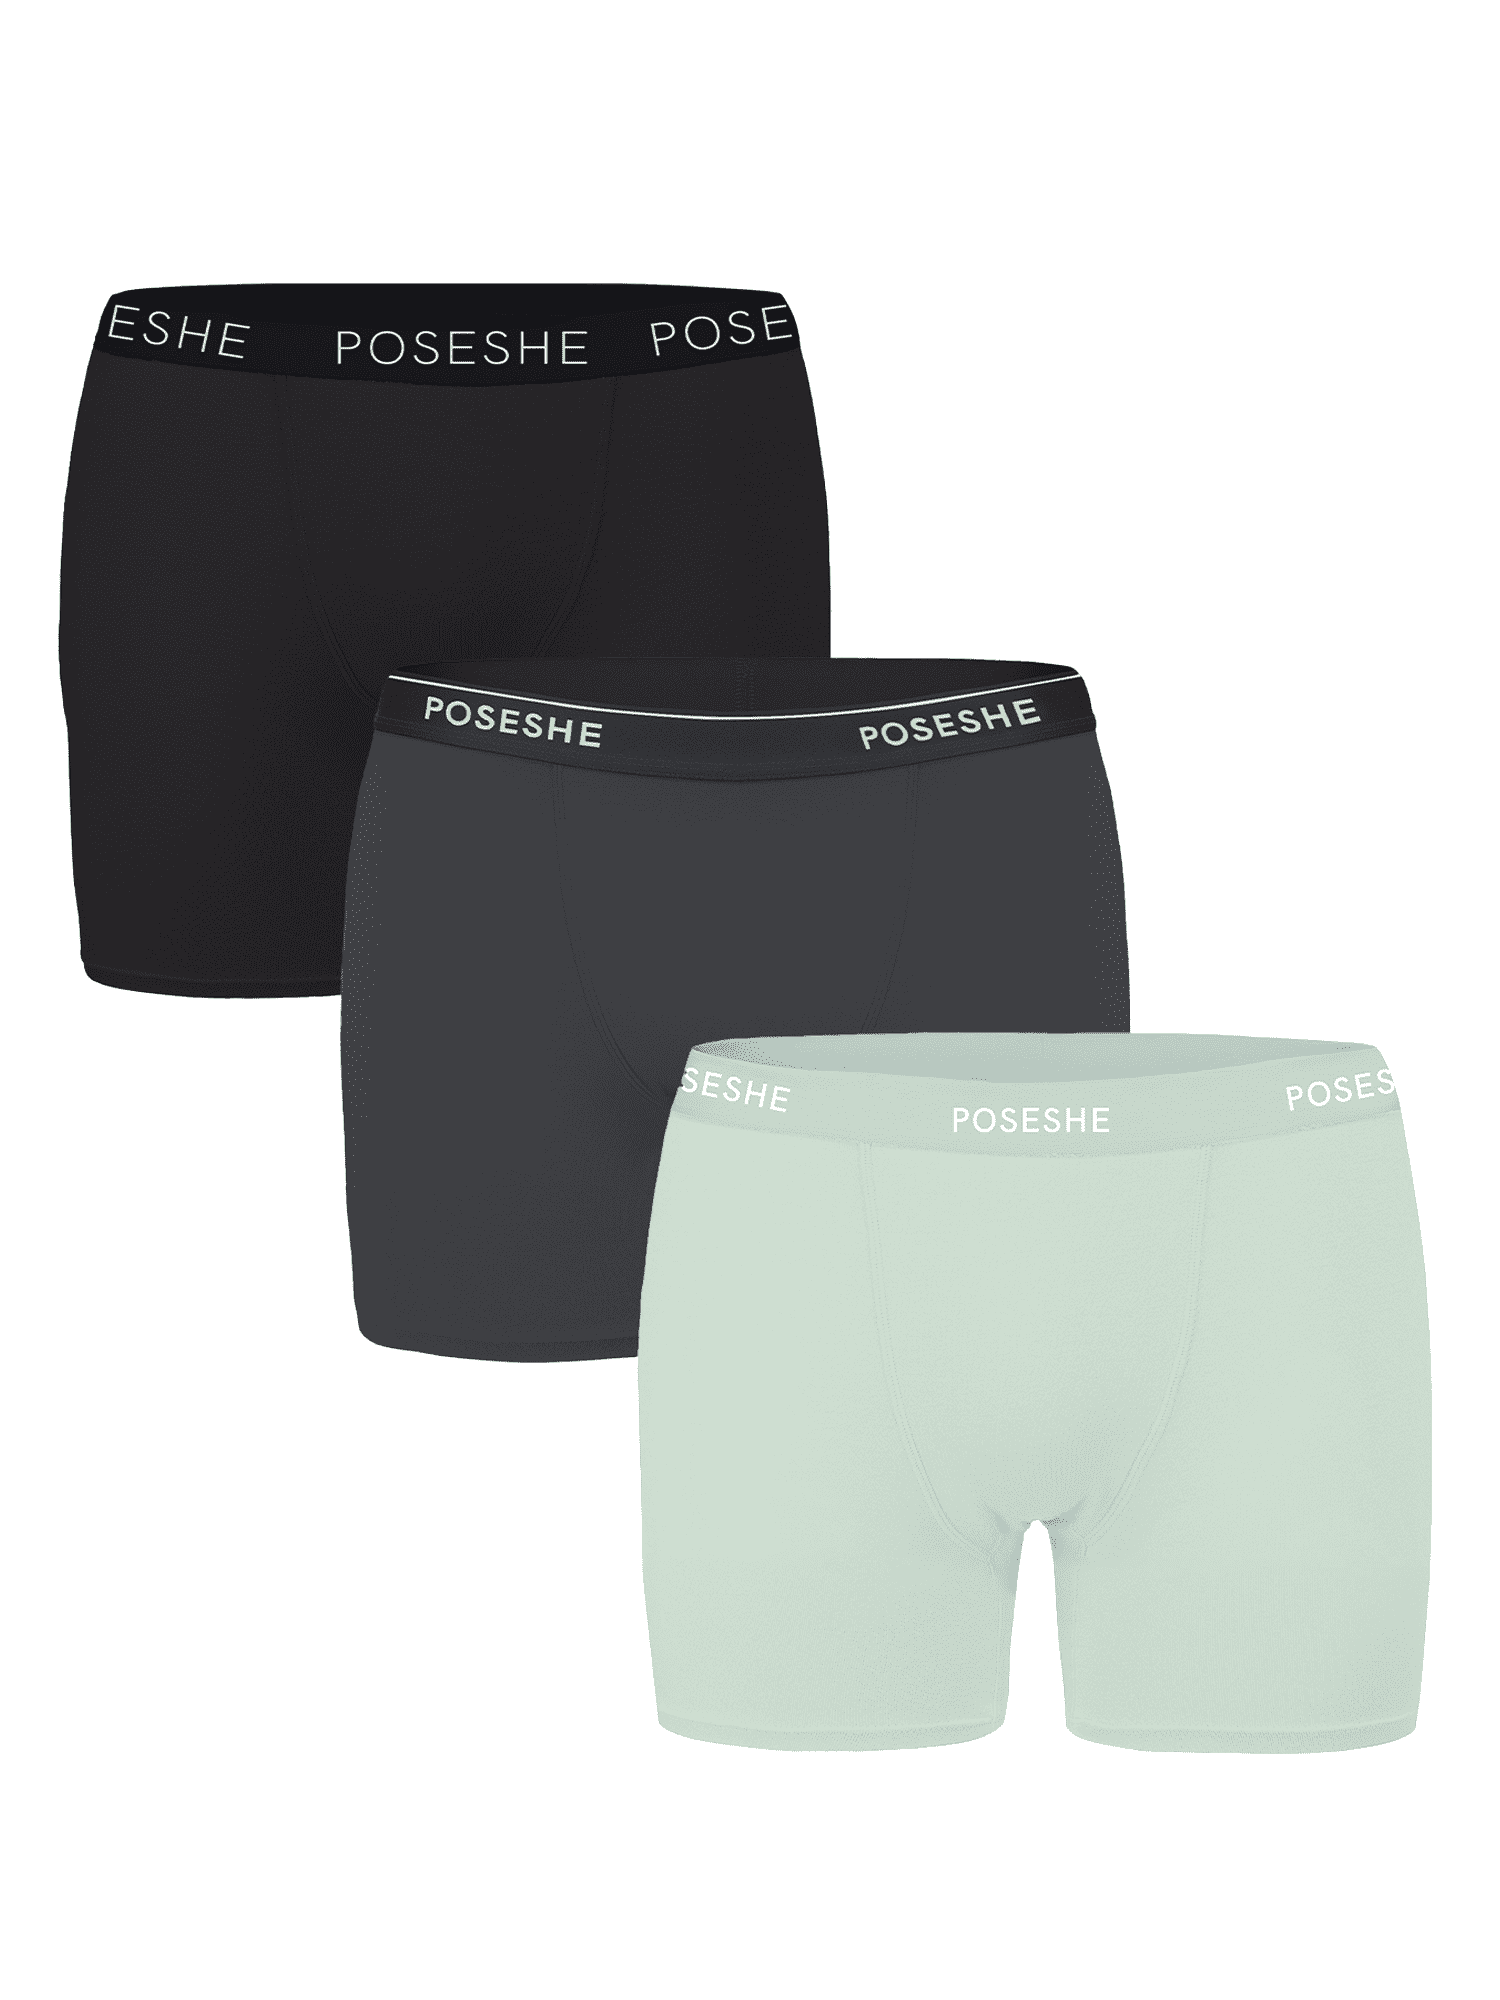 POSESHE Women's Boyshorts Panties Underwear, 6/8 inseam, S-5XL Plus Size,  3-Pack 